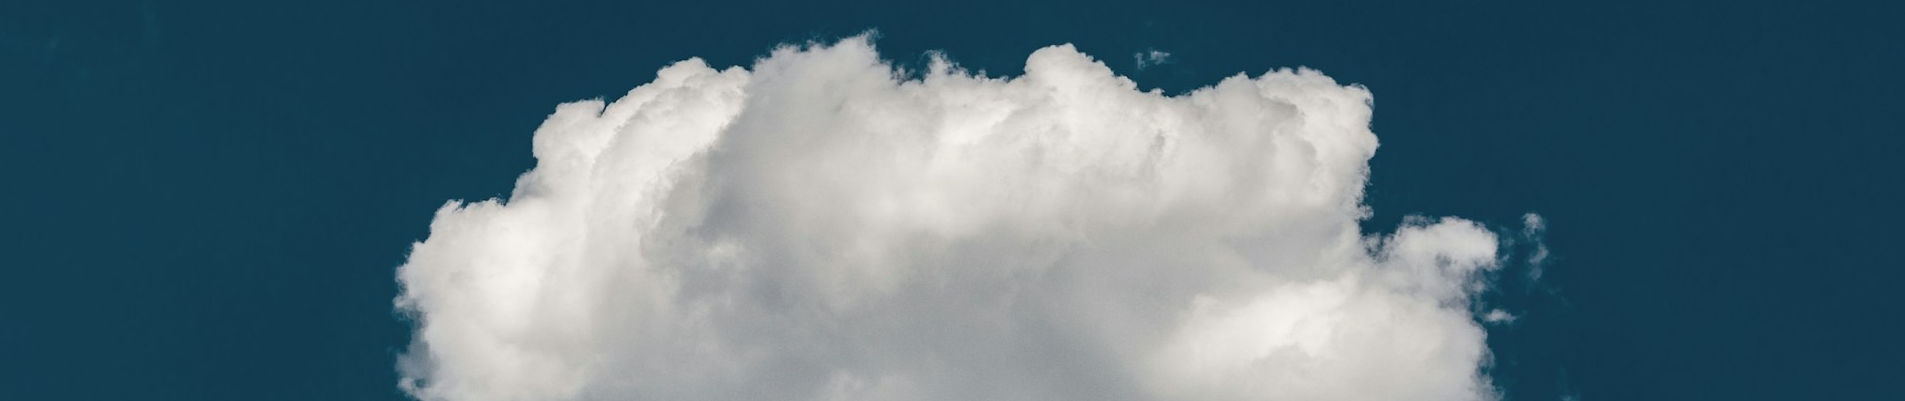 an image of a cloud